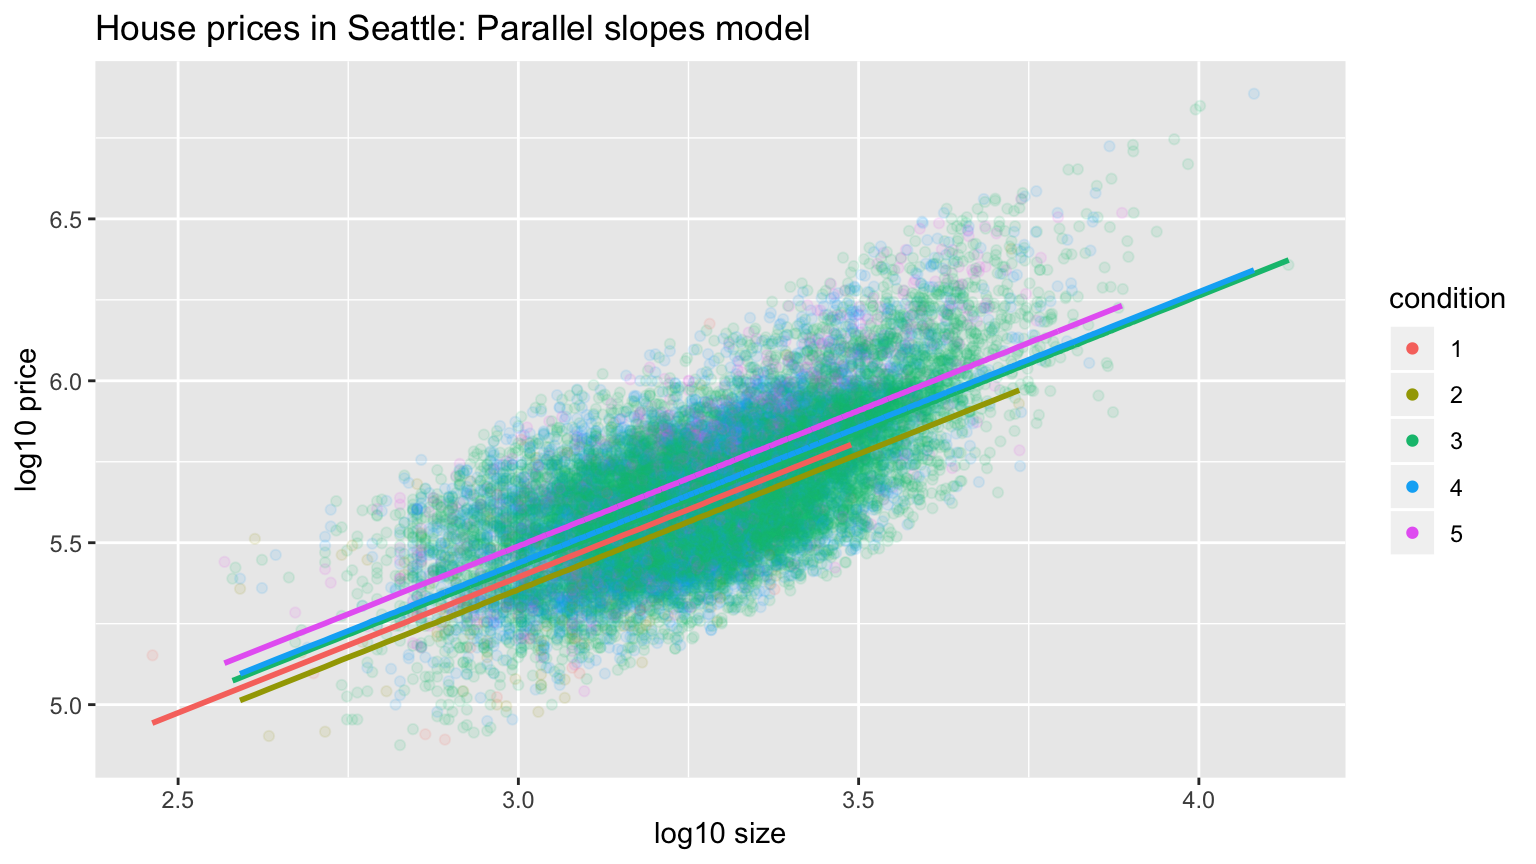 Parallel slopes model